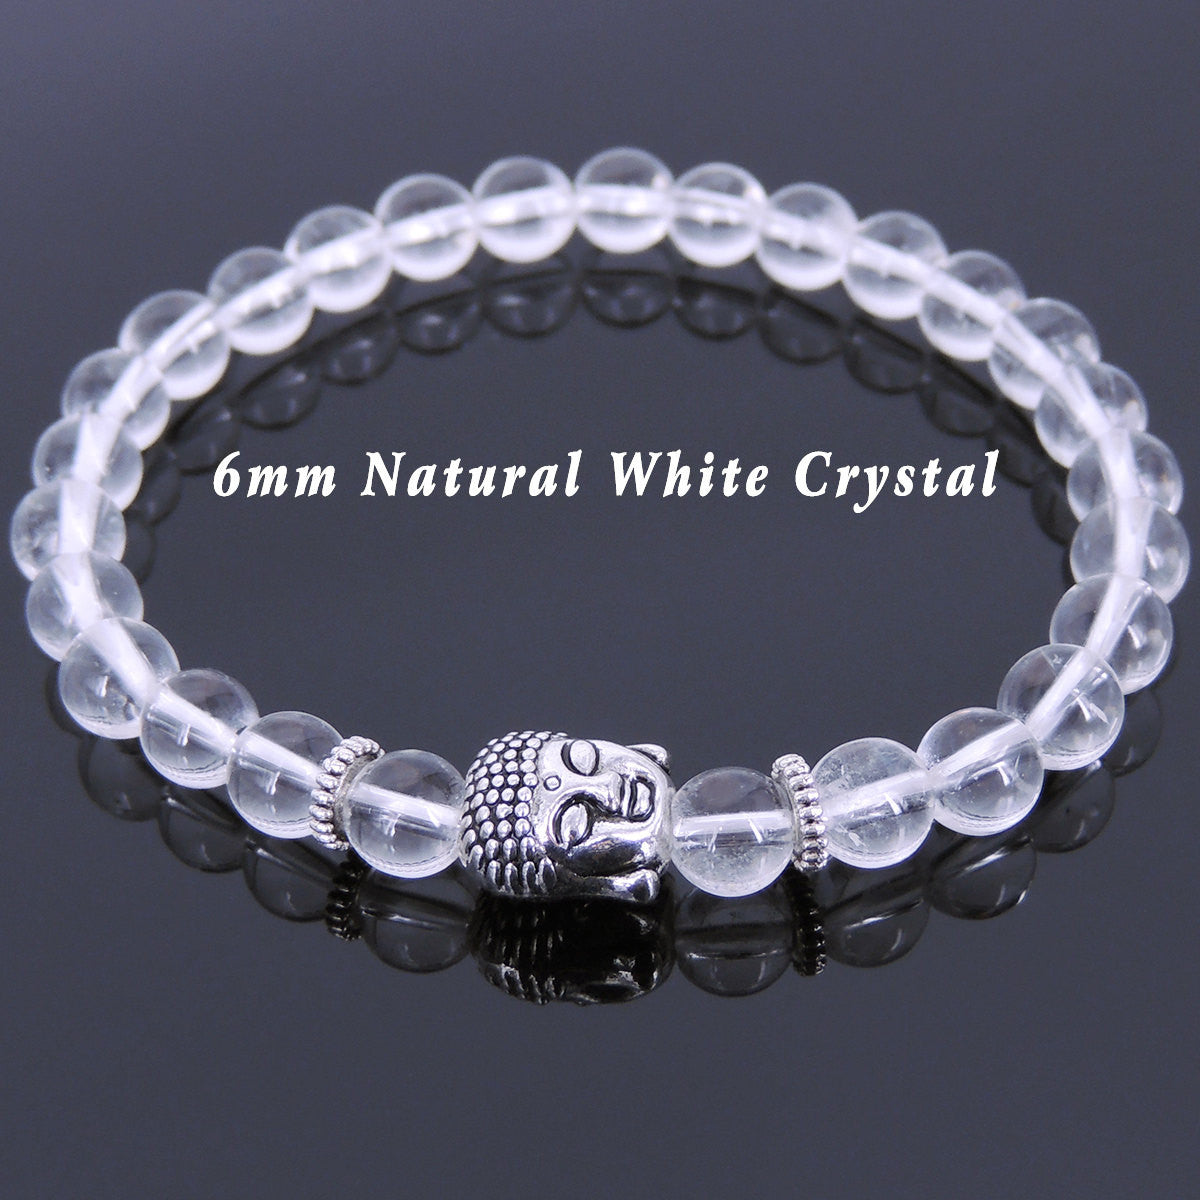 6mm White Crystal Quartz Healing Gemstone Bracelet with Tibetan Silver Spacers & Sakyamuni Buddha - Handmade by Gem & Silver TSB132